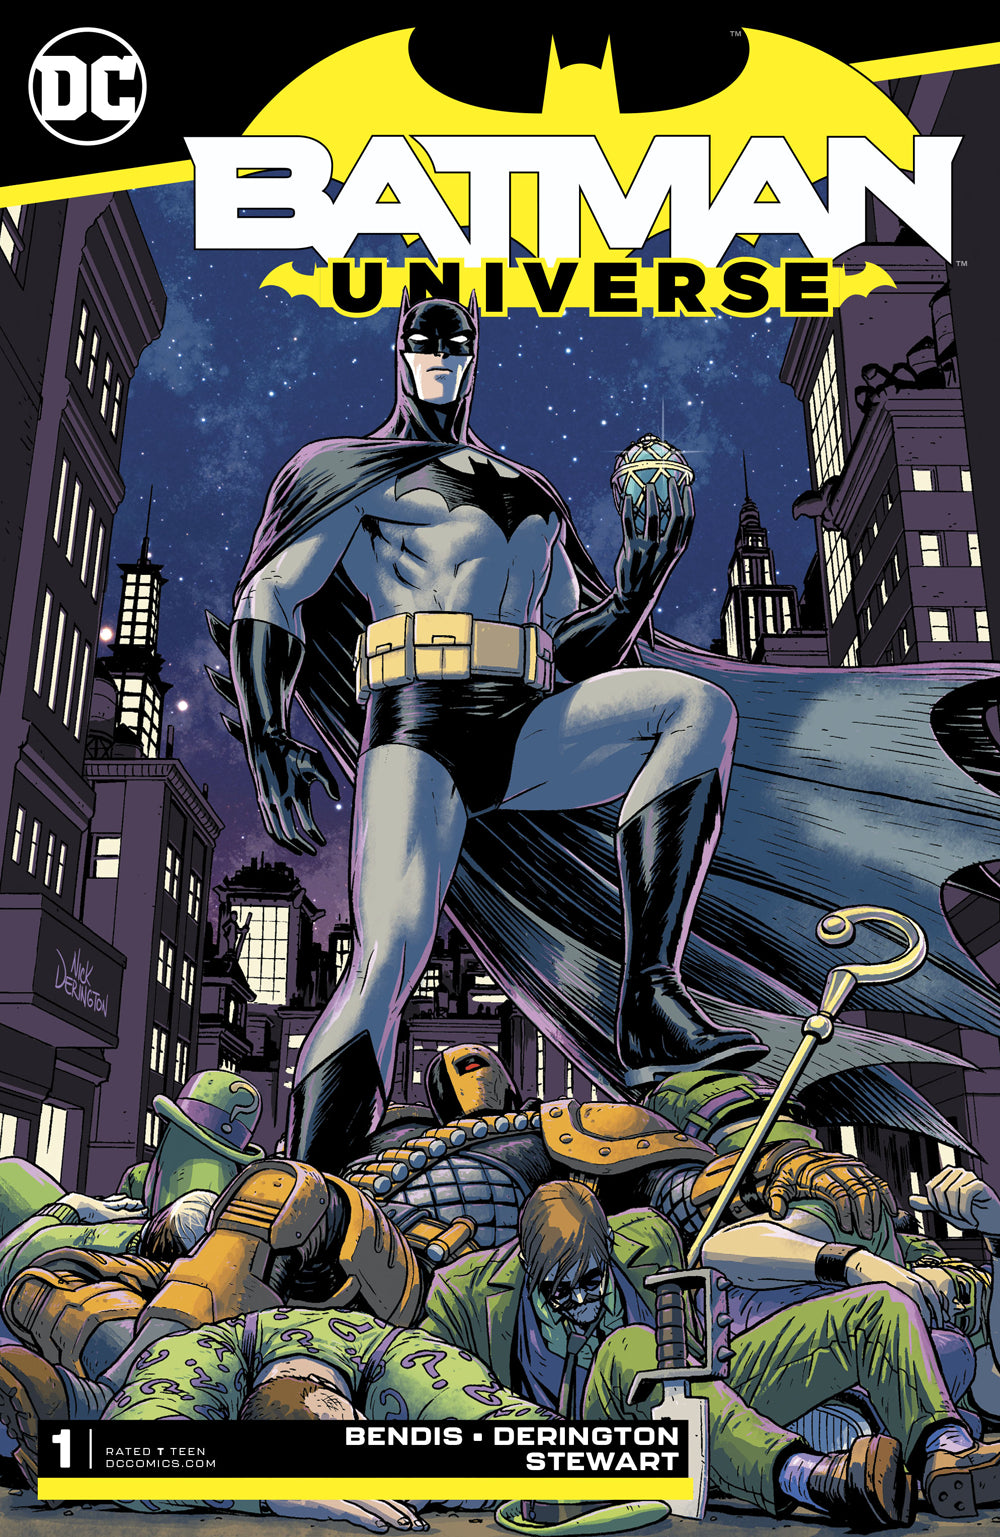 BATMAN UNIVERSE #1 (OF 6) | Game Master's Emporium (The New GME)